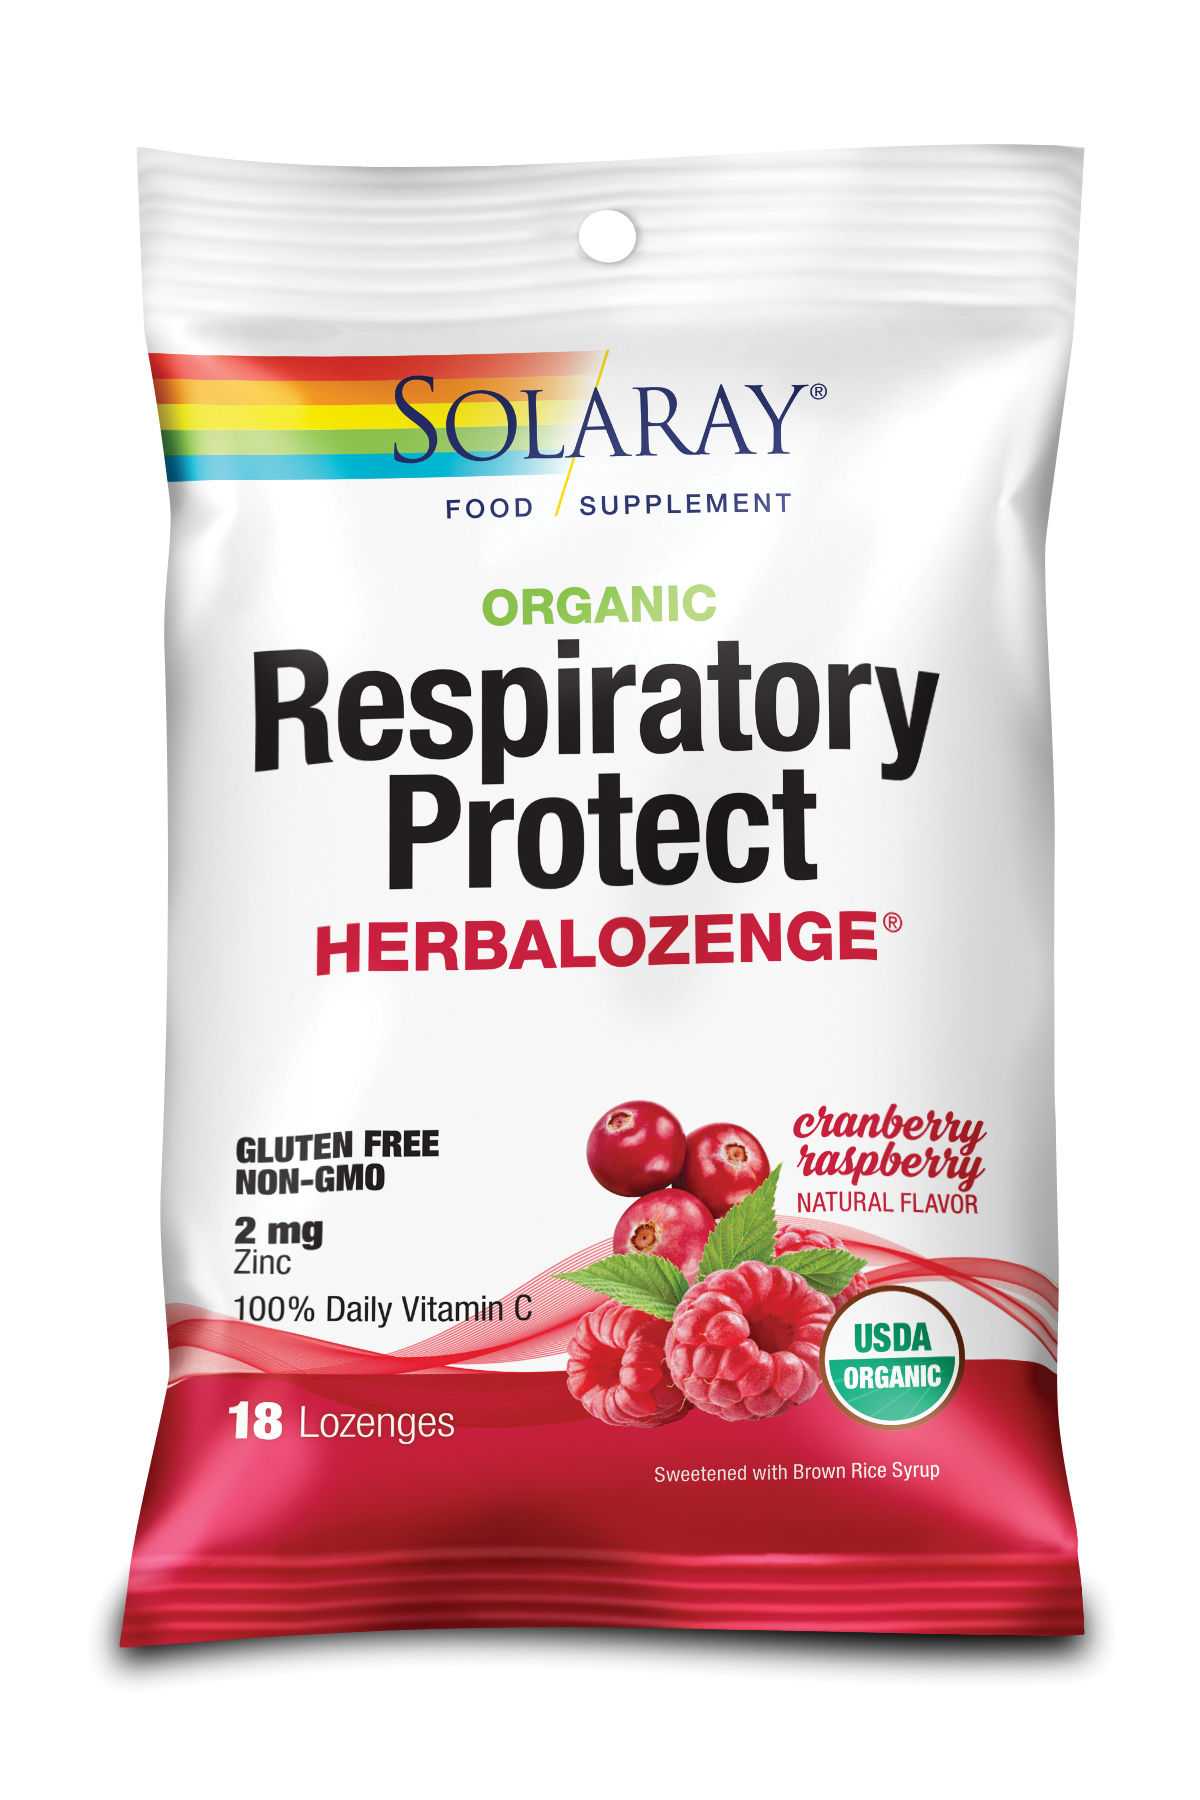 Dureri de gat - Dropsuri pentru gât Respiratory Protect HerbaLozenge Cranberry Raspberry Solaray, 18 bucăți, Secom, sinapis.ro